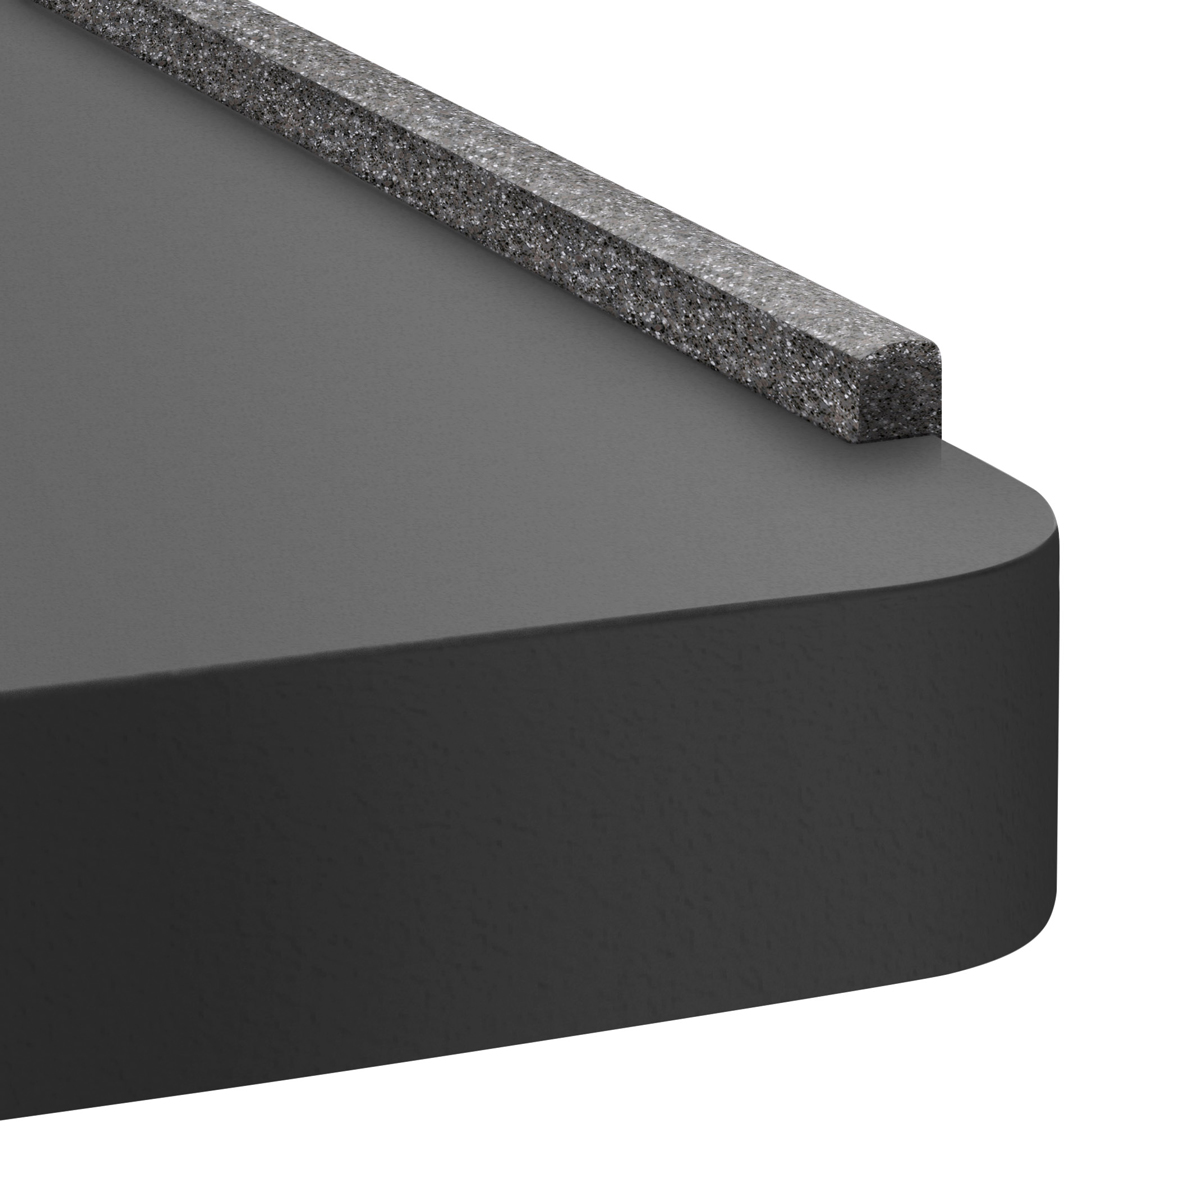 Bench top 100 x 60 x 4 cm, surface Softstop dark gray, border mineral material, optional equipment for Ergolift
Evolution